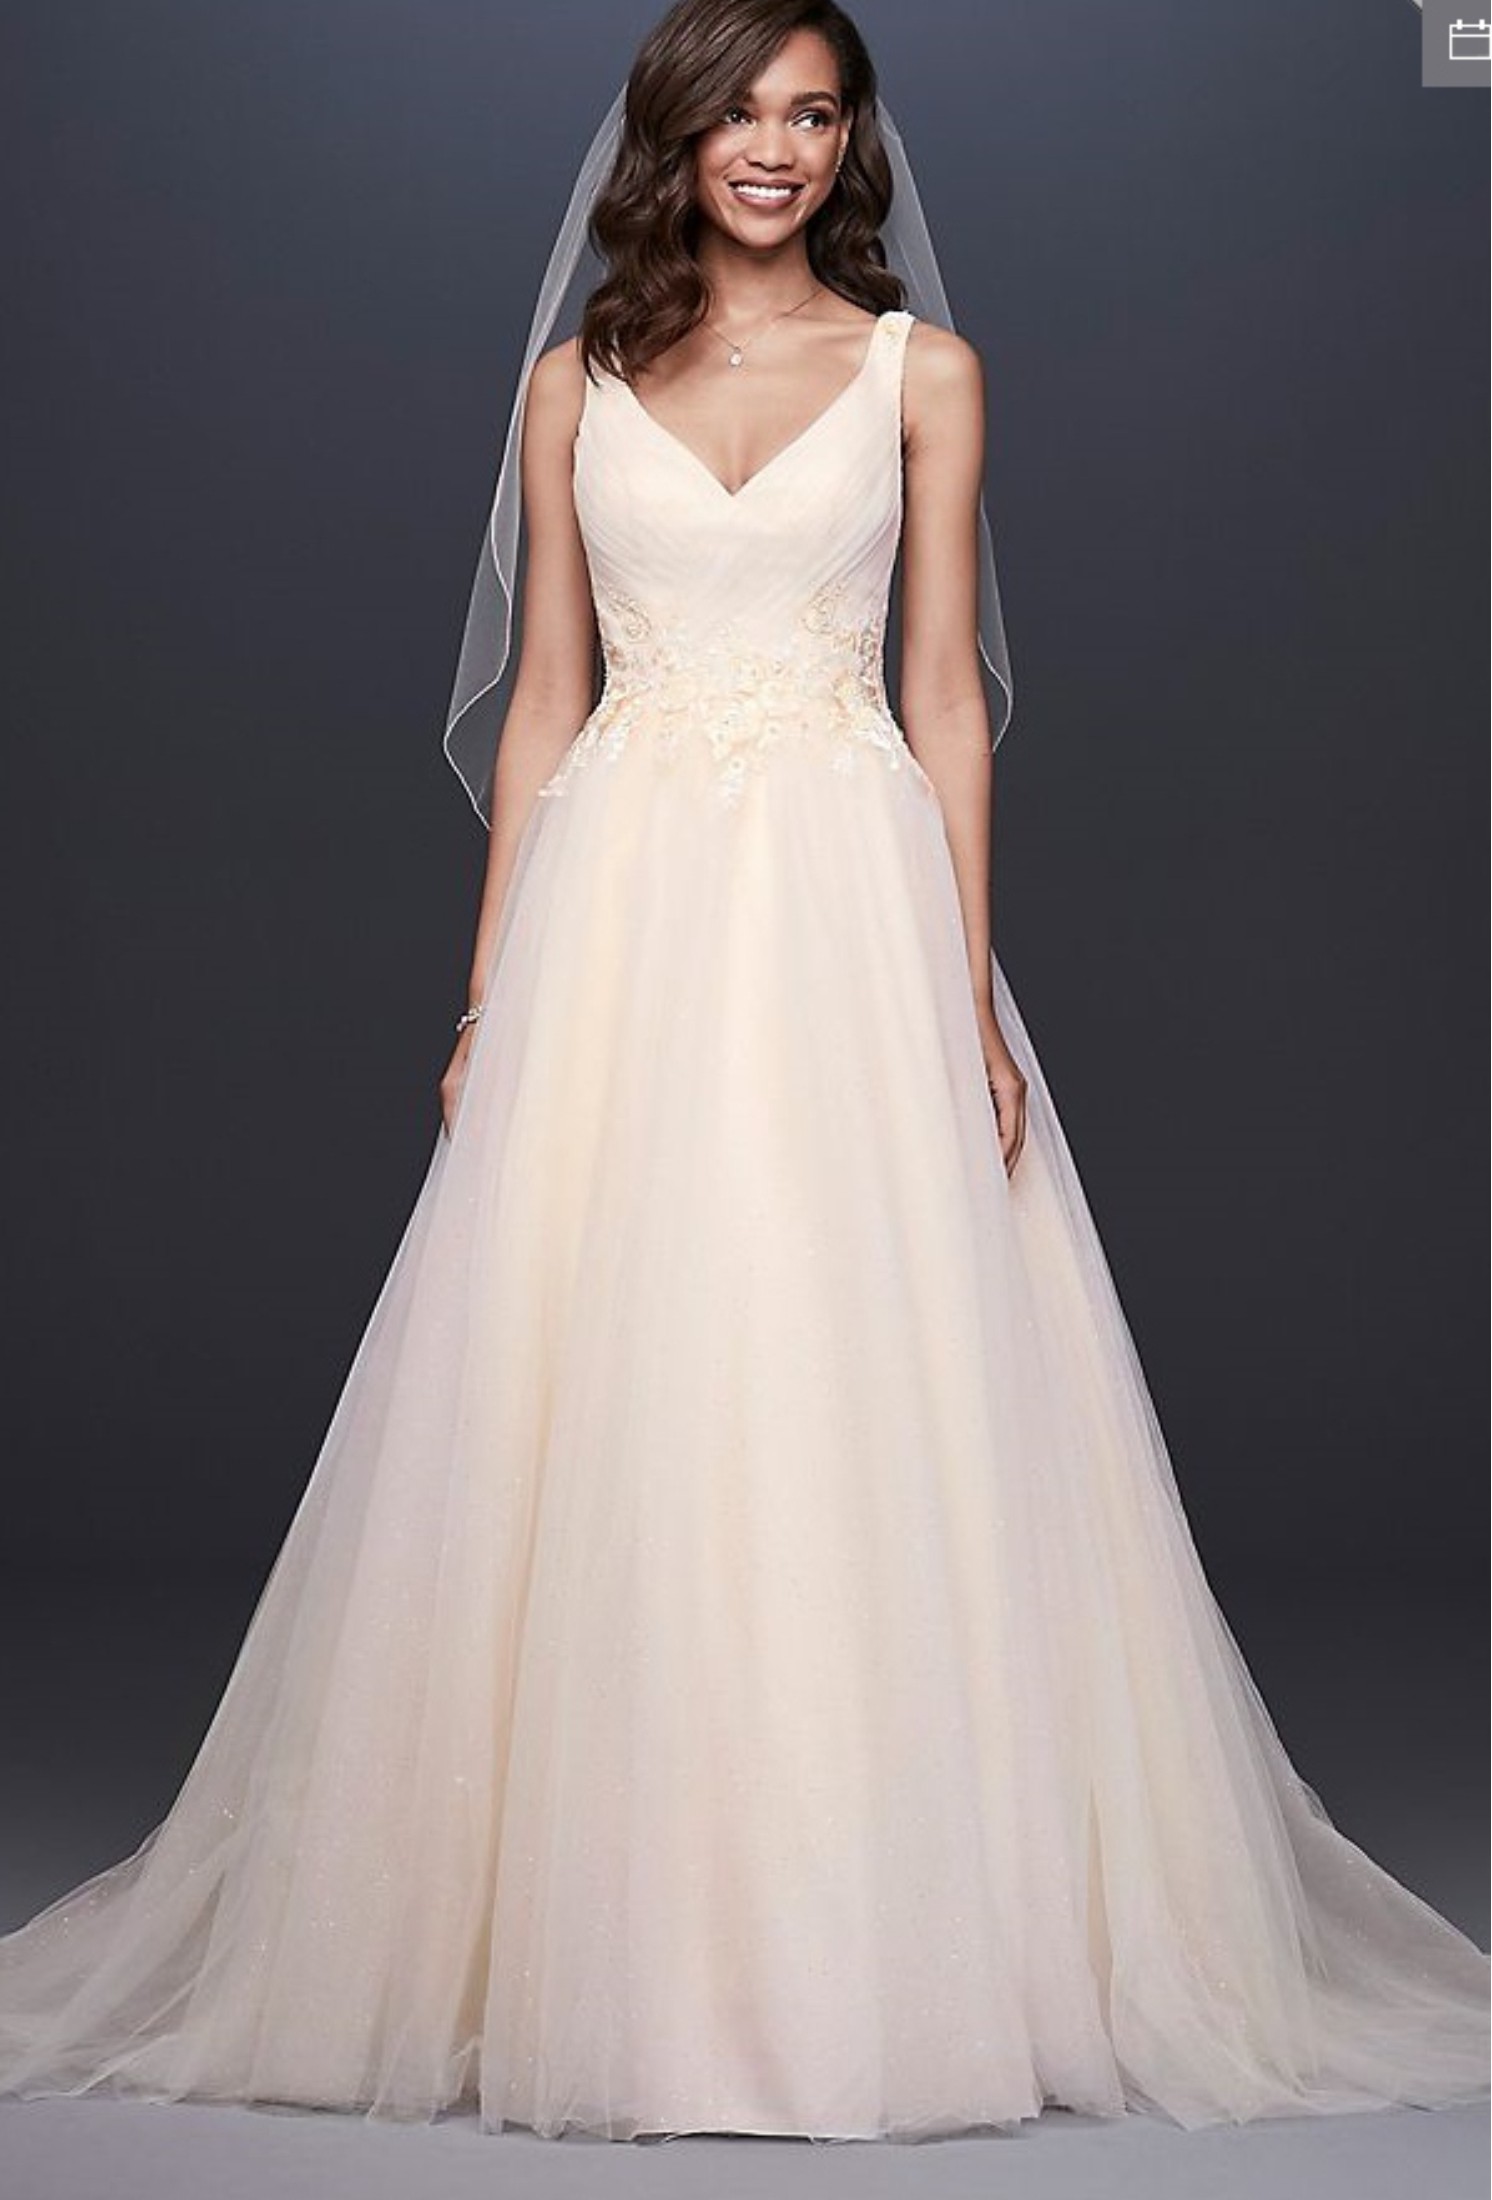 David s Bridal WG3930 New Wedding Dress Save 25 Stillwhite